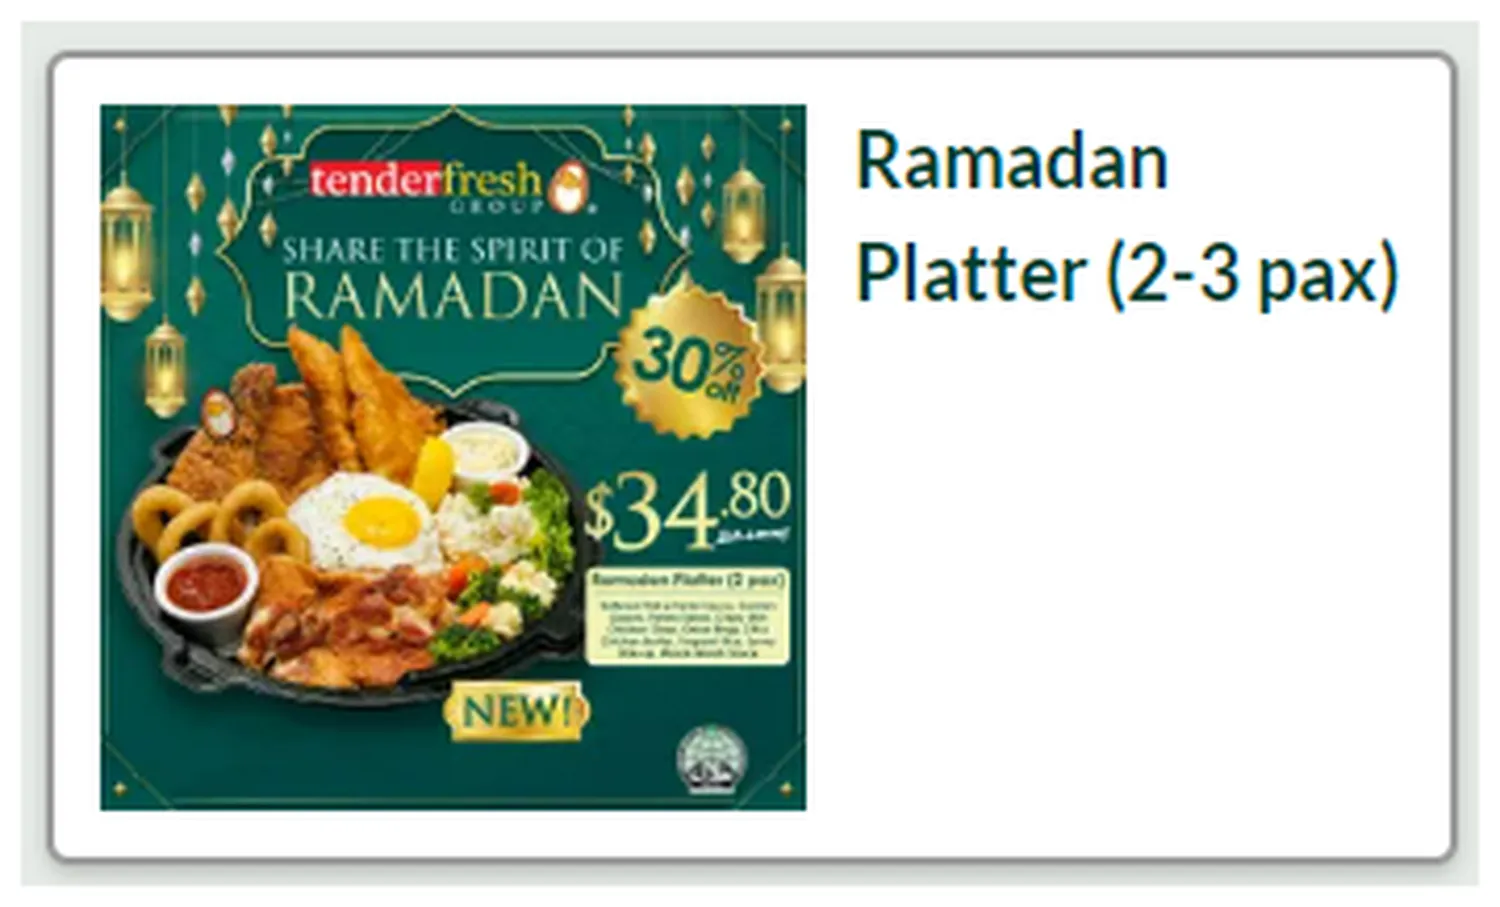 tenderbest menu singapore share the spirit of ramadan 30 off